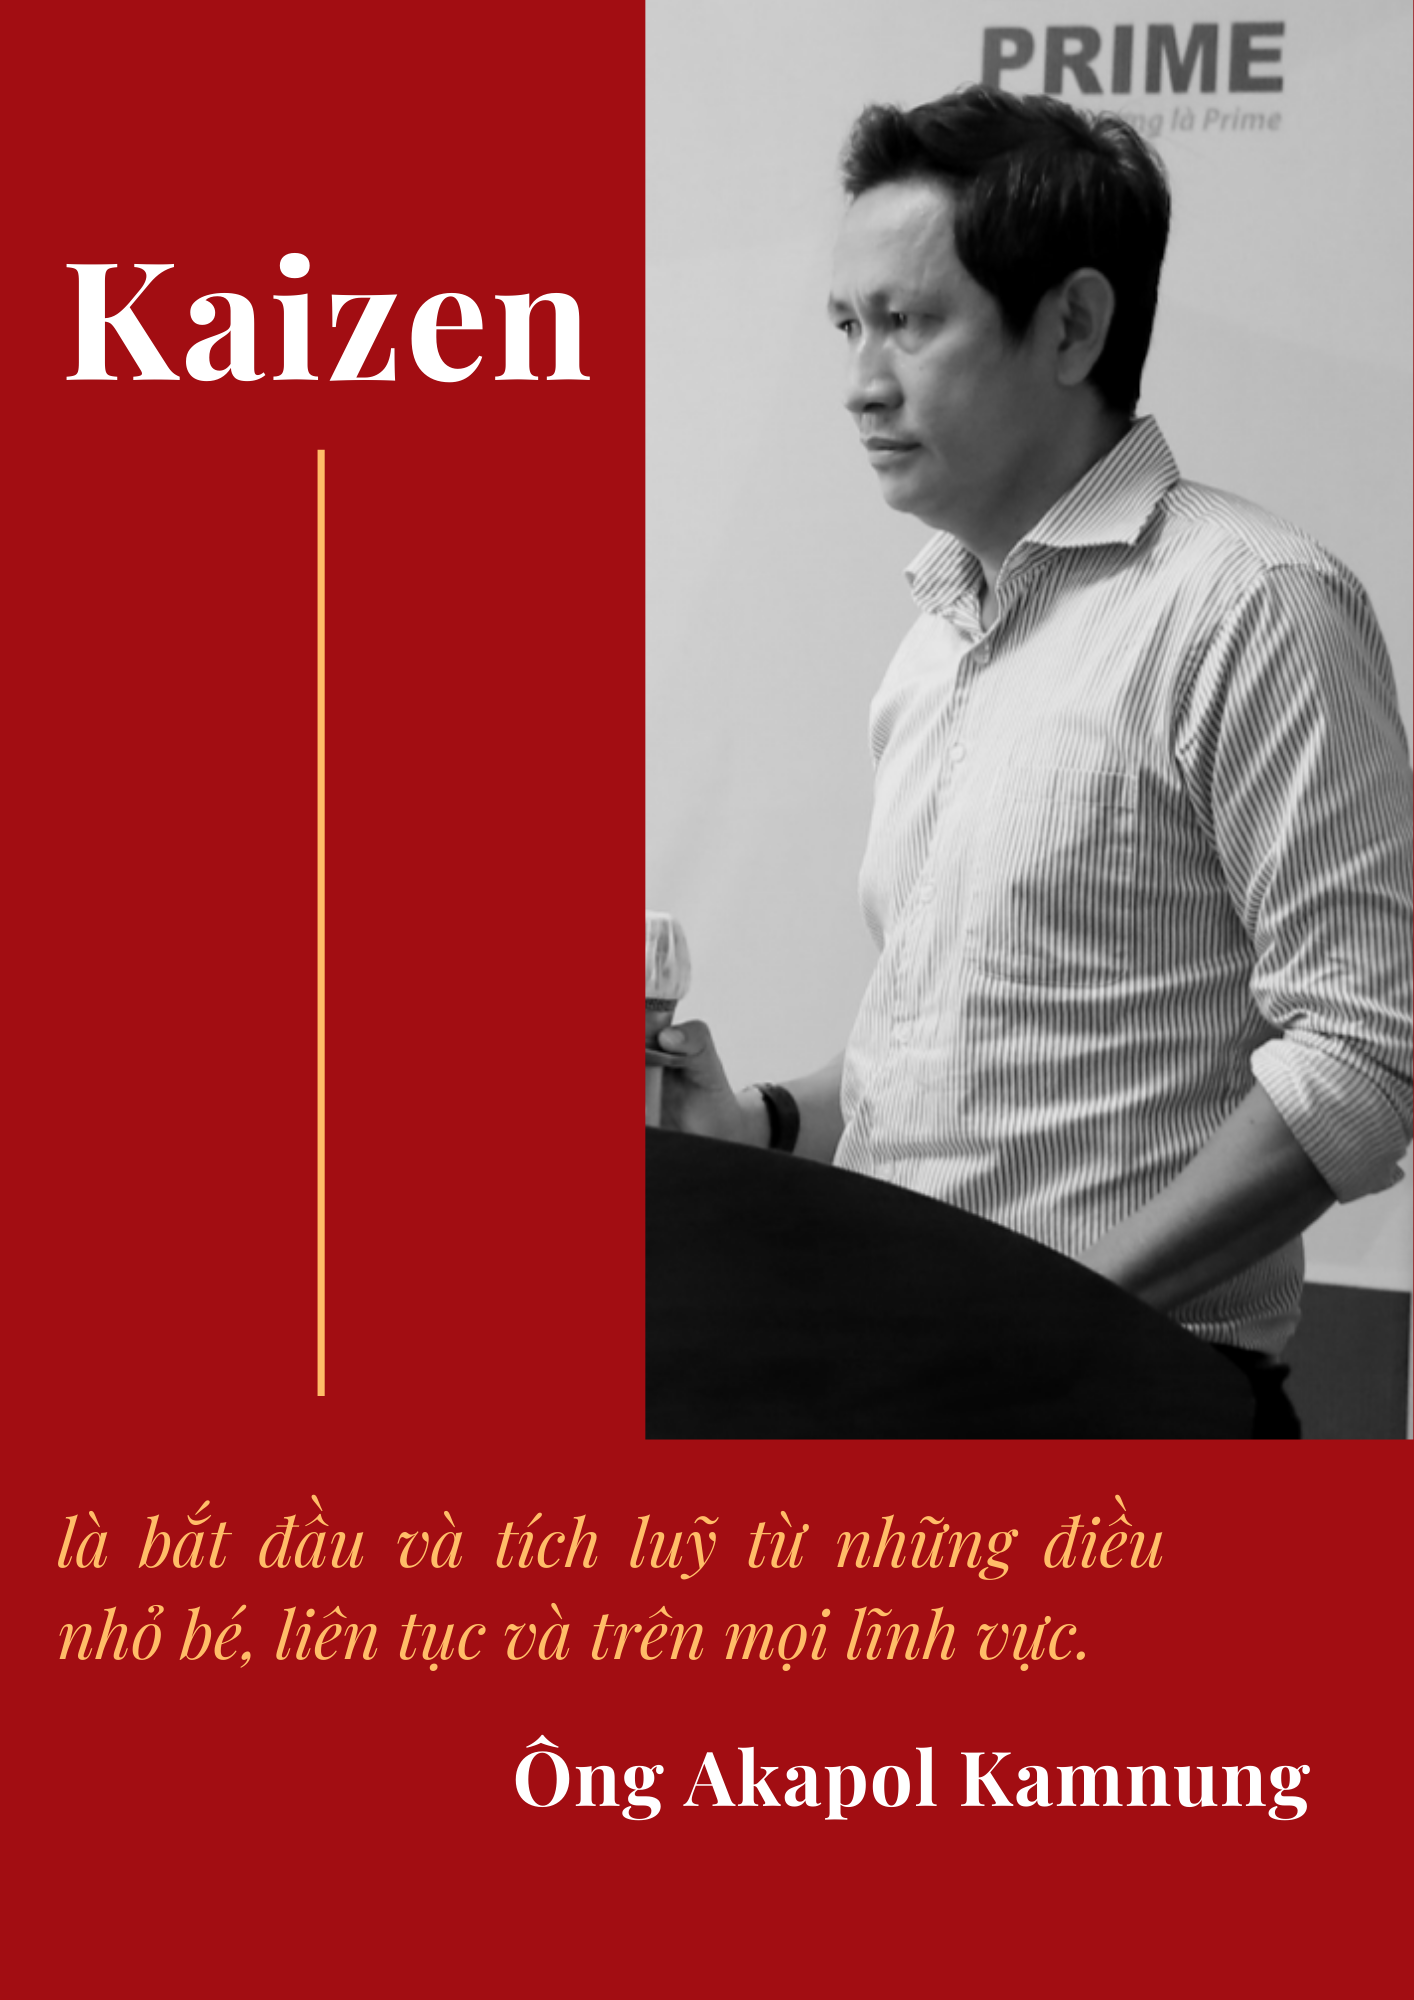 Tinh thần Kaizen của Prime Group